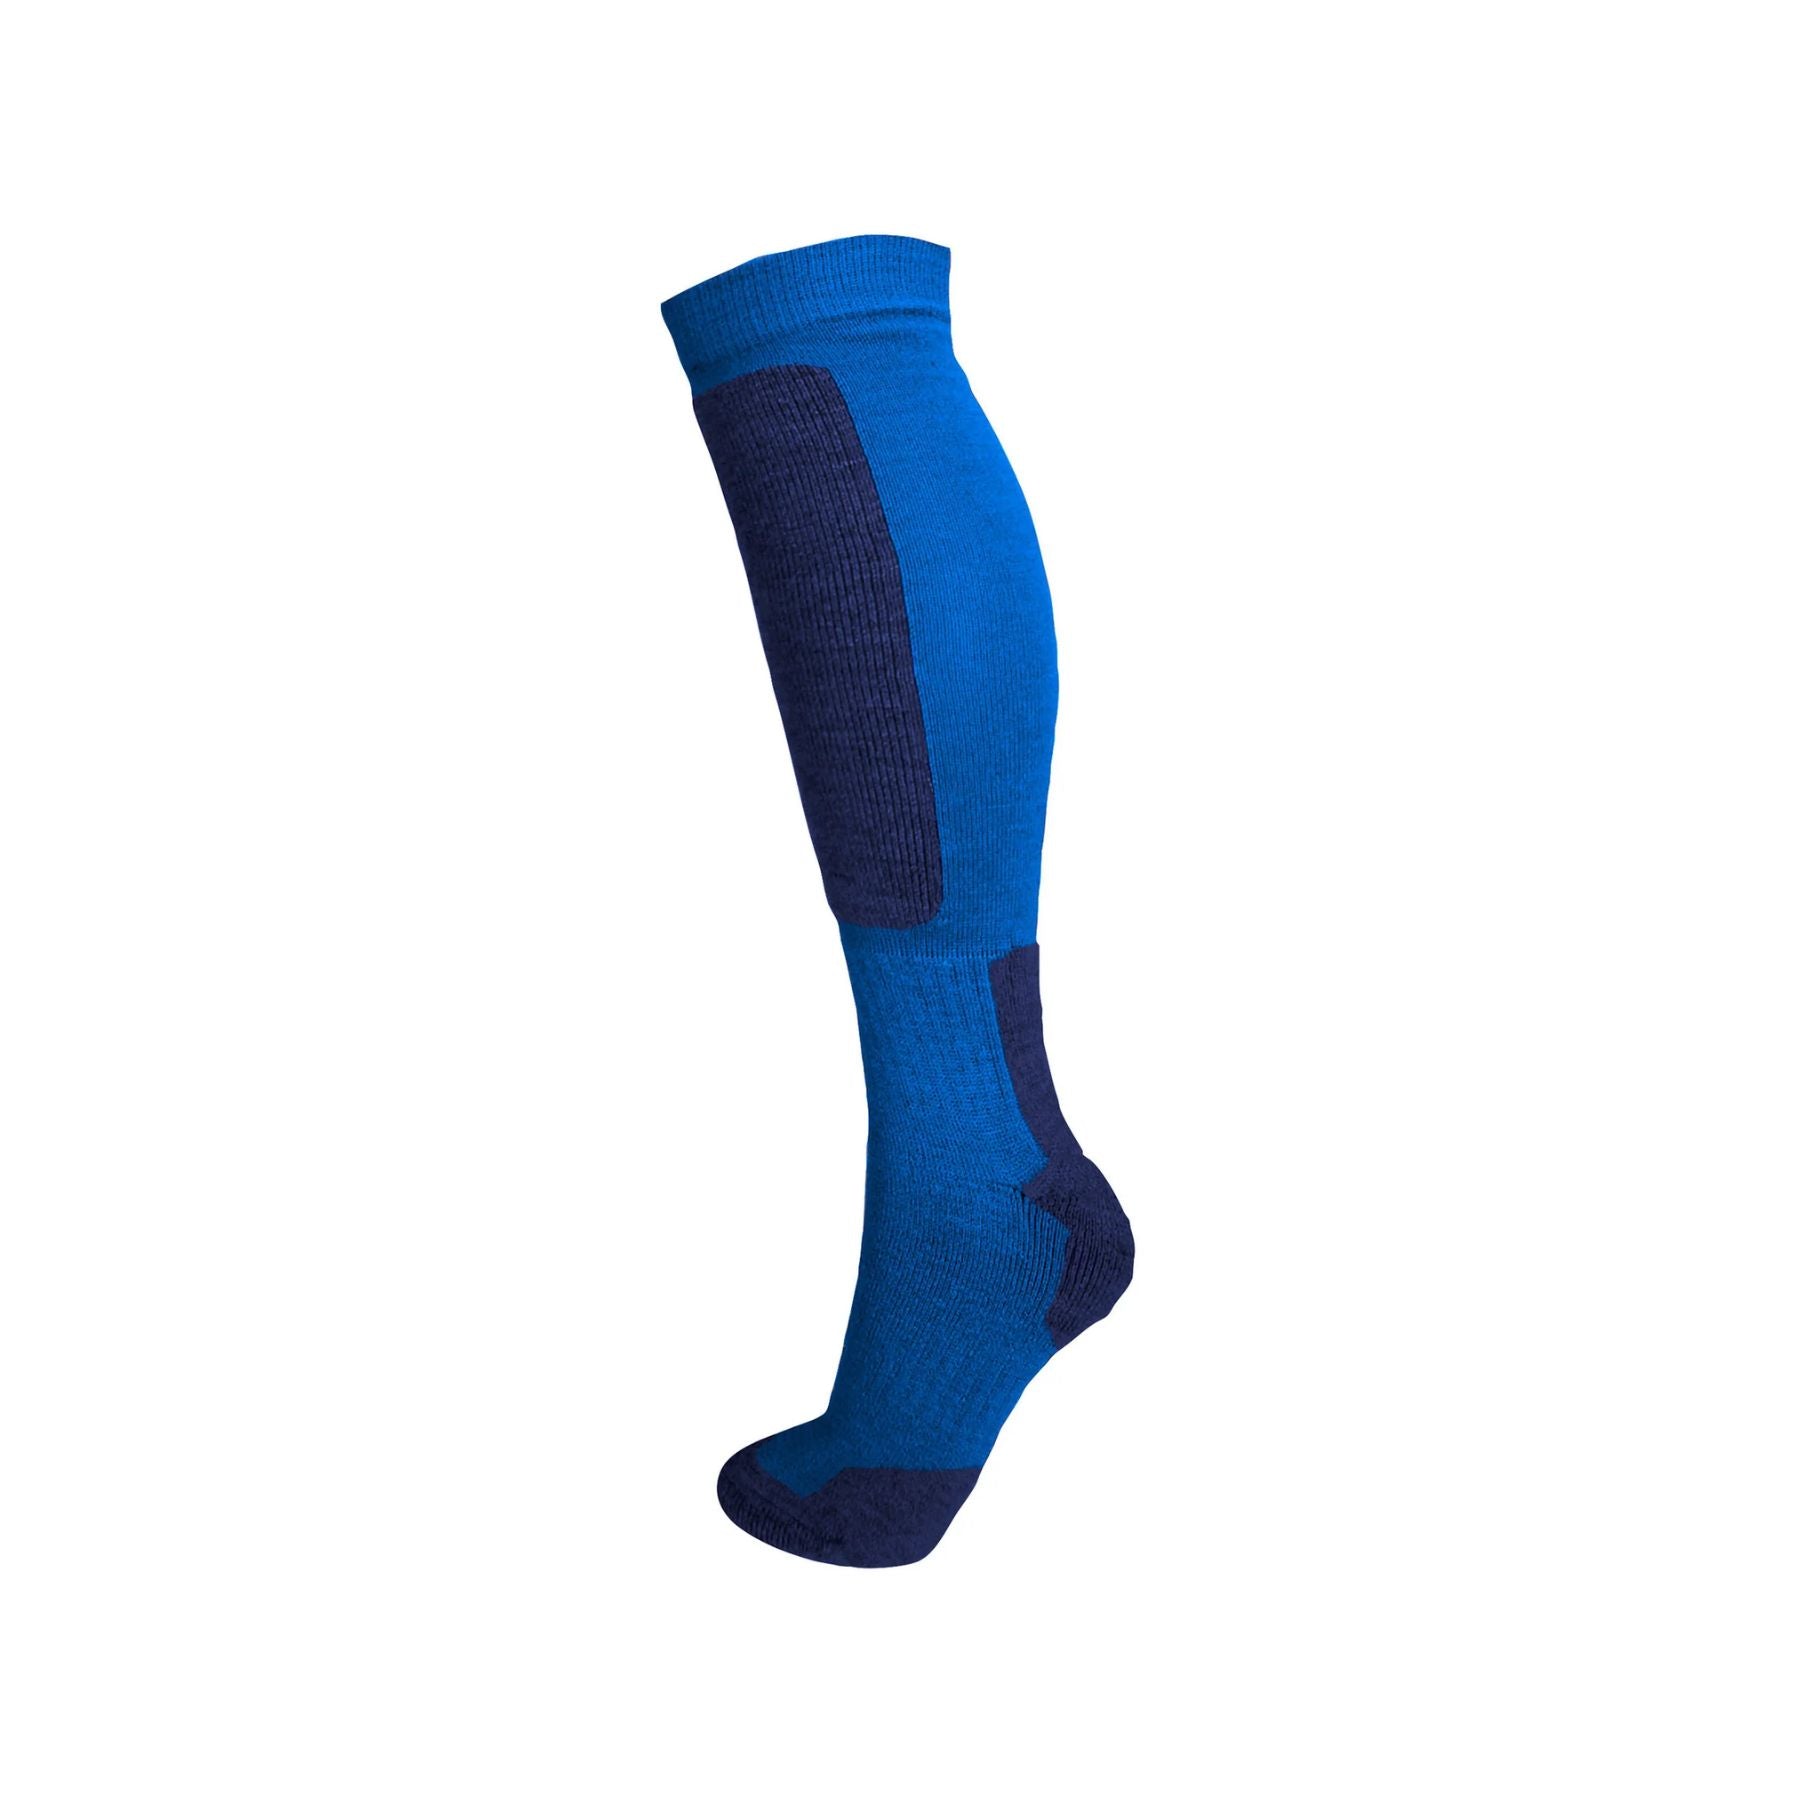 Manbi Snow-Tec Kid's Sock in Olympic Blue/Navy